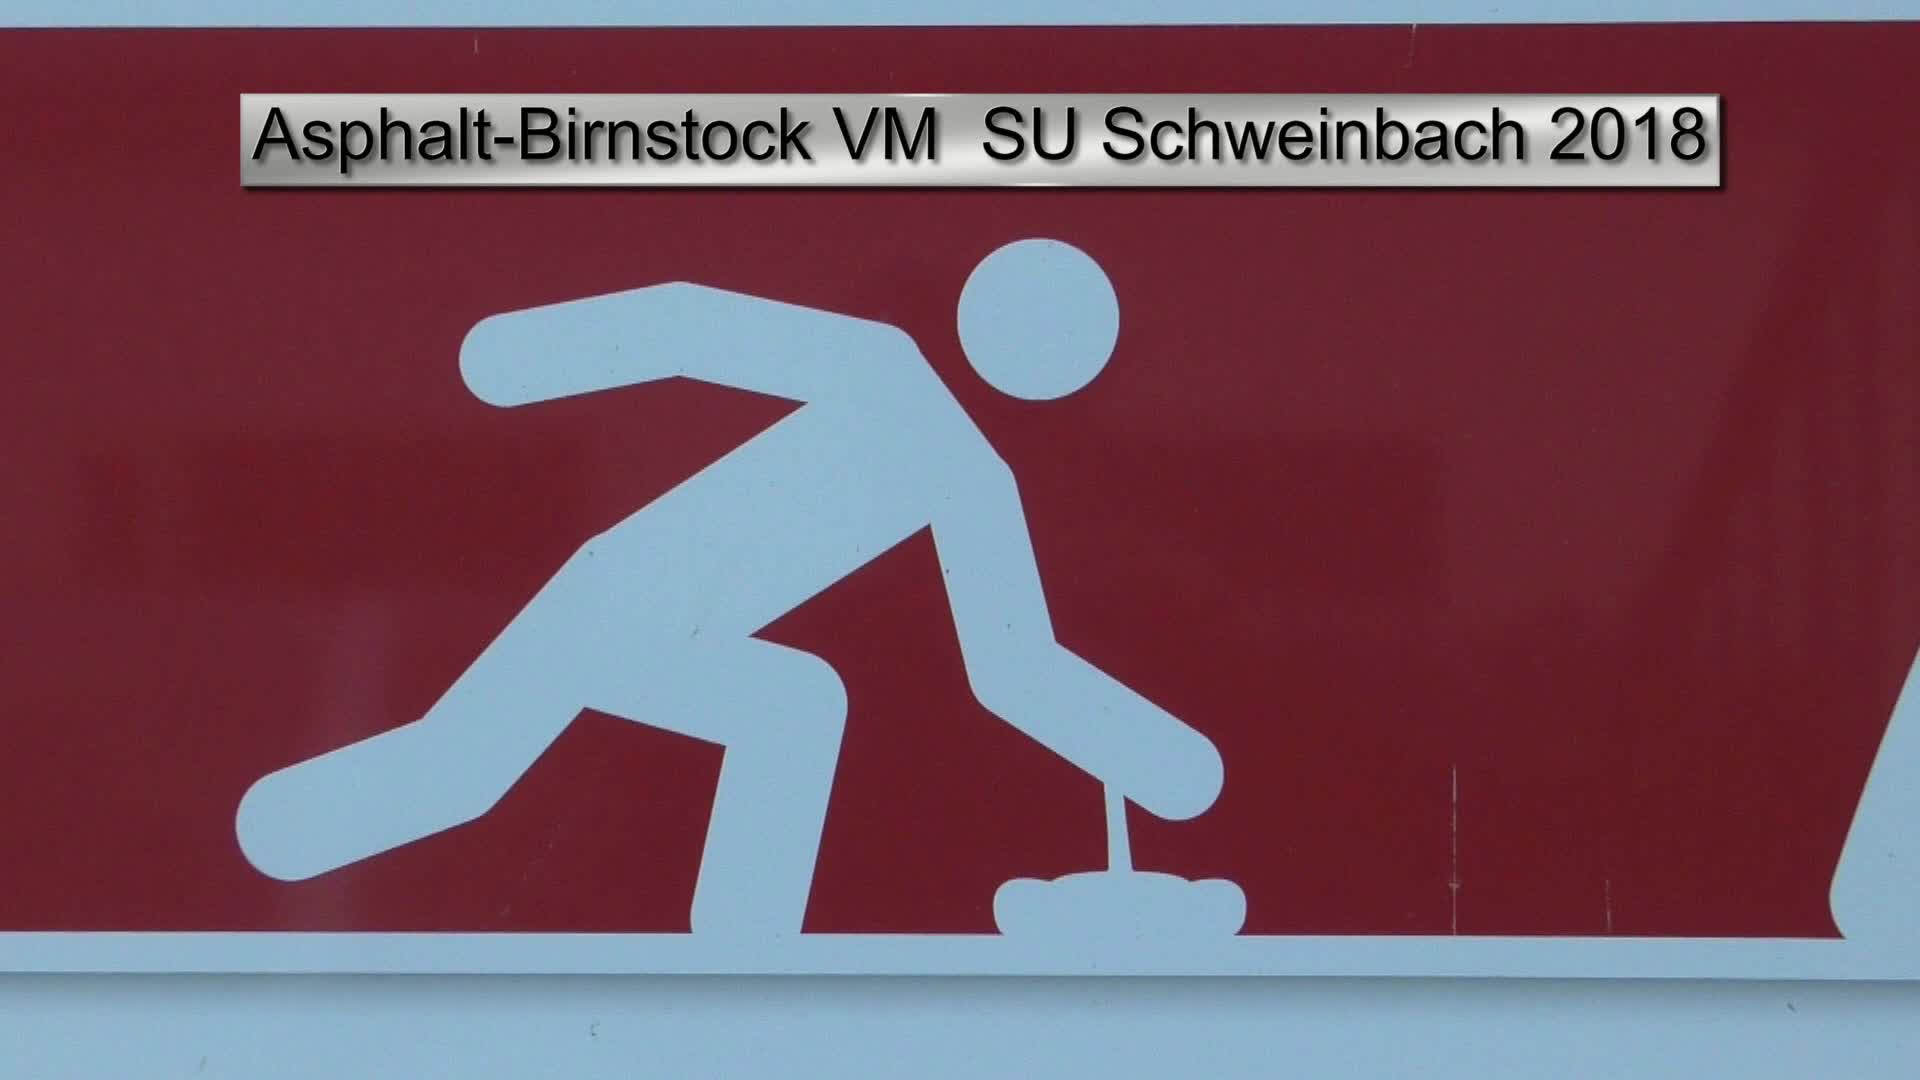 Asphalt-Birnstock VM SU Schweinbach